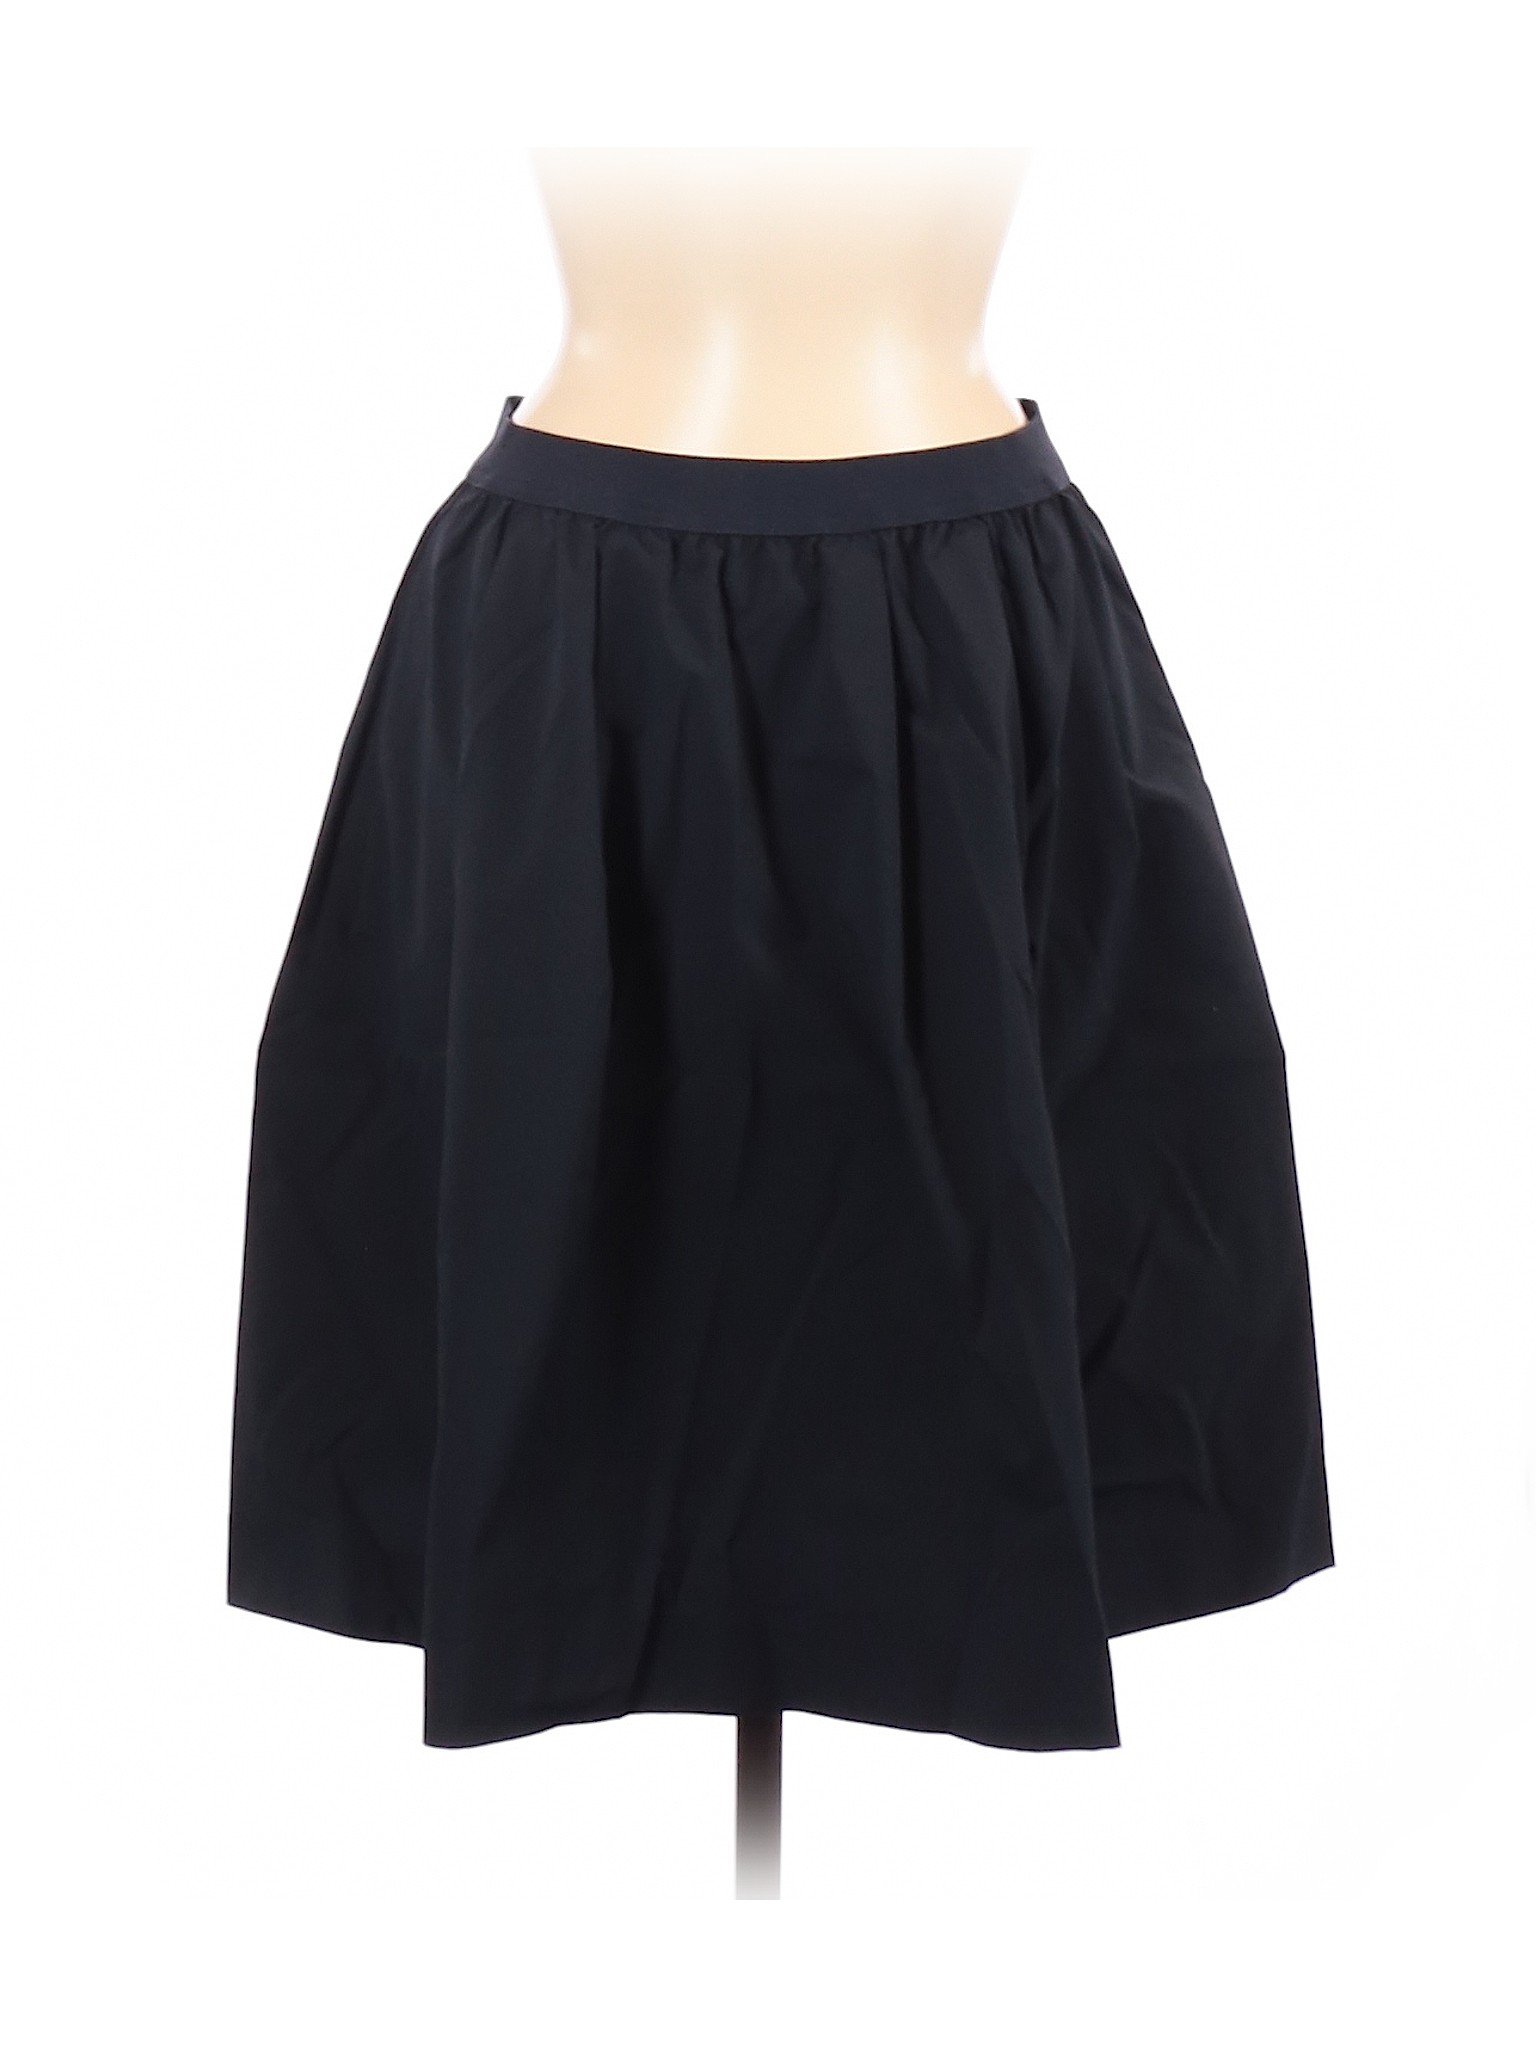 Uniqlo Women Black Casual Skirt M | eBay